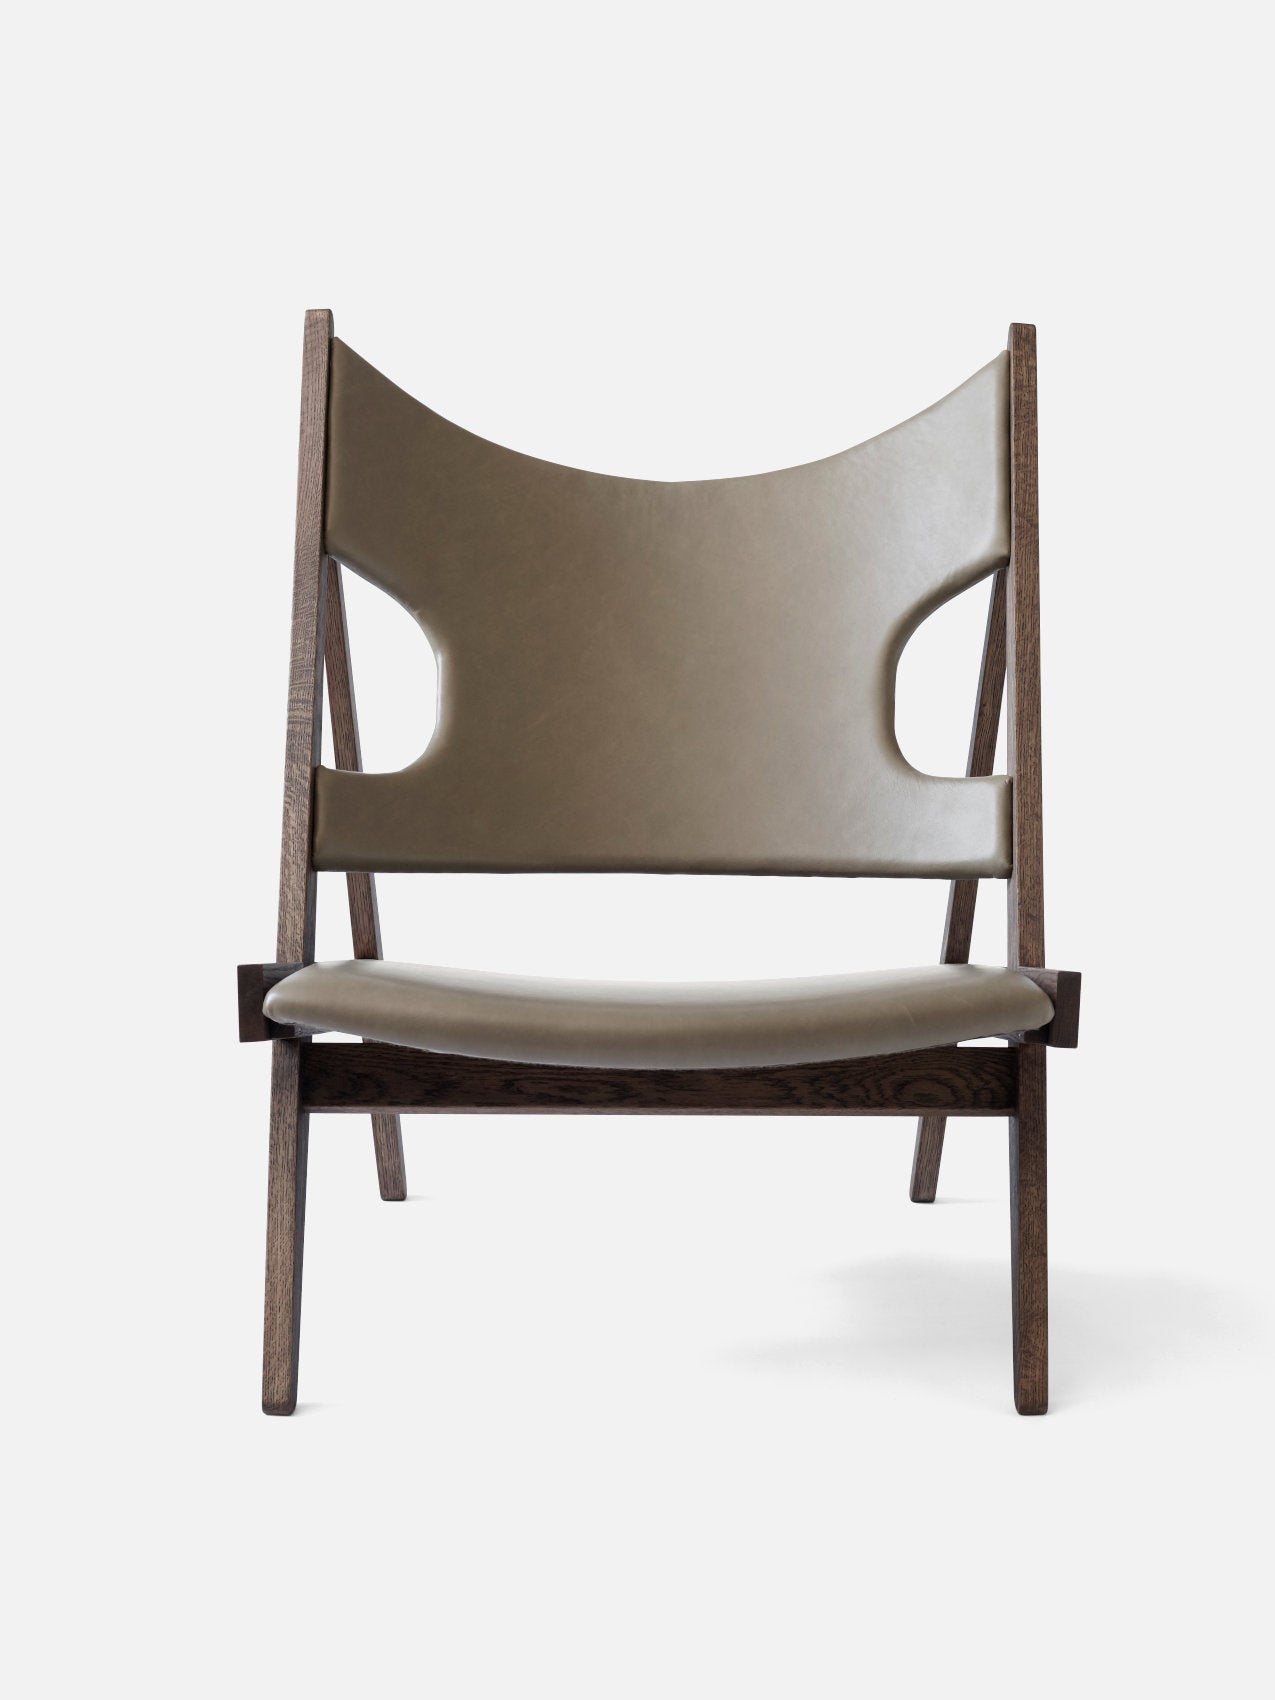 Knitting Chair-Lounge Chair-Ib Kofod-Larsen-Lounge Height (Seat 11.8in H)/Dark Oak-0311 Antilop/Dakar-menu-minimalist-modern-danish-design-home-decor